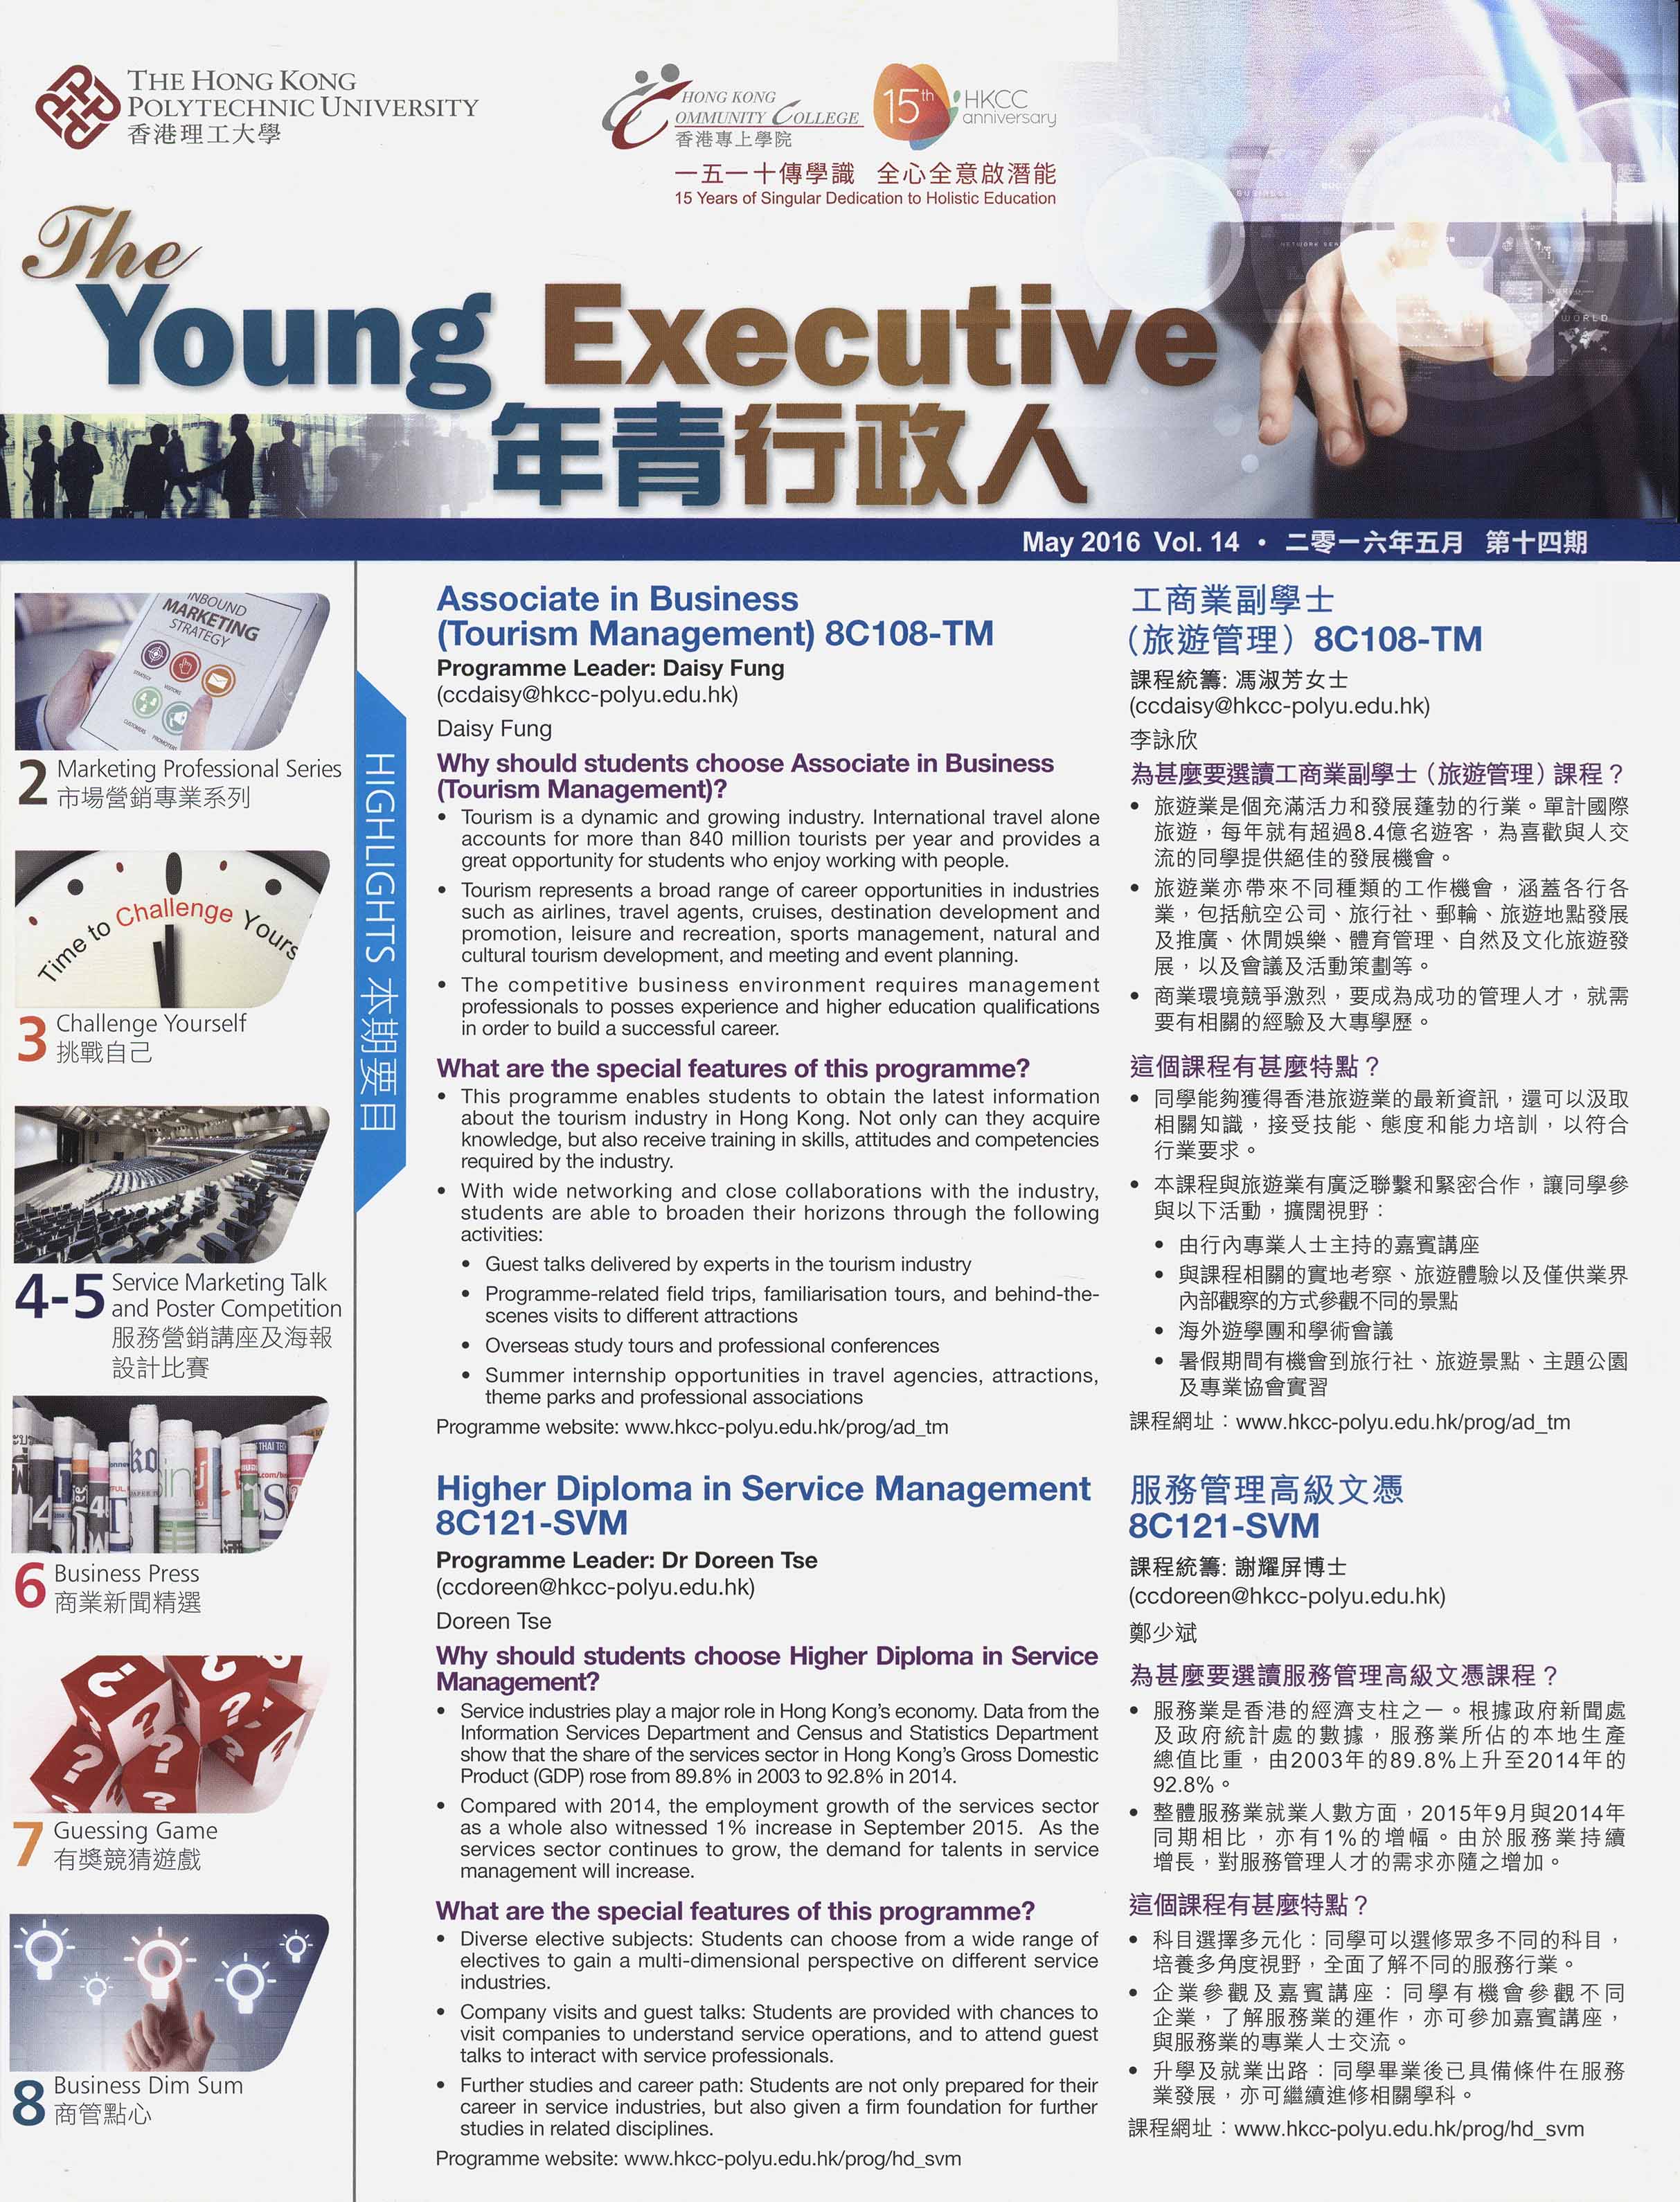 The Young executive. Vol. 14